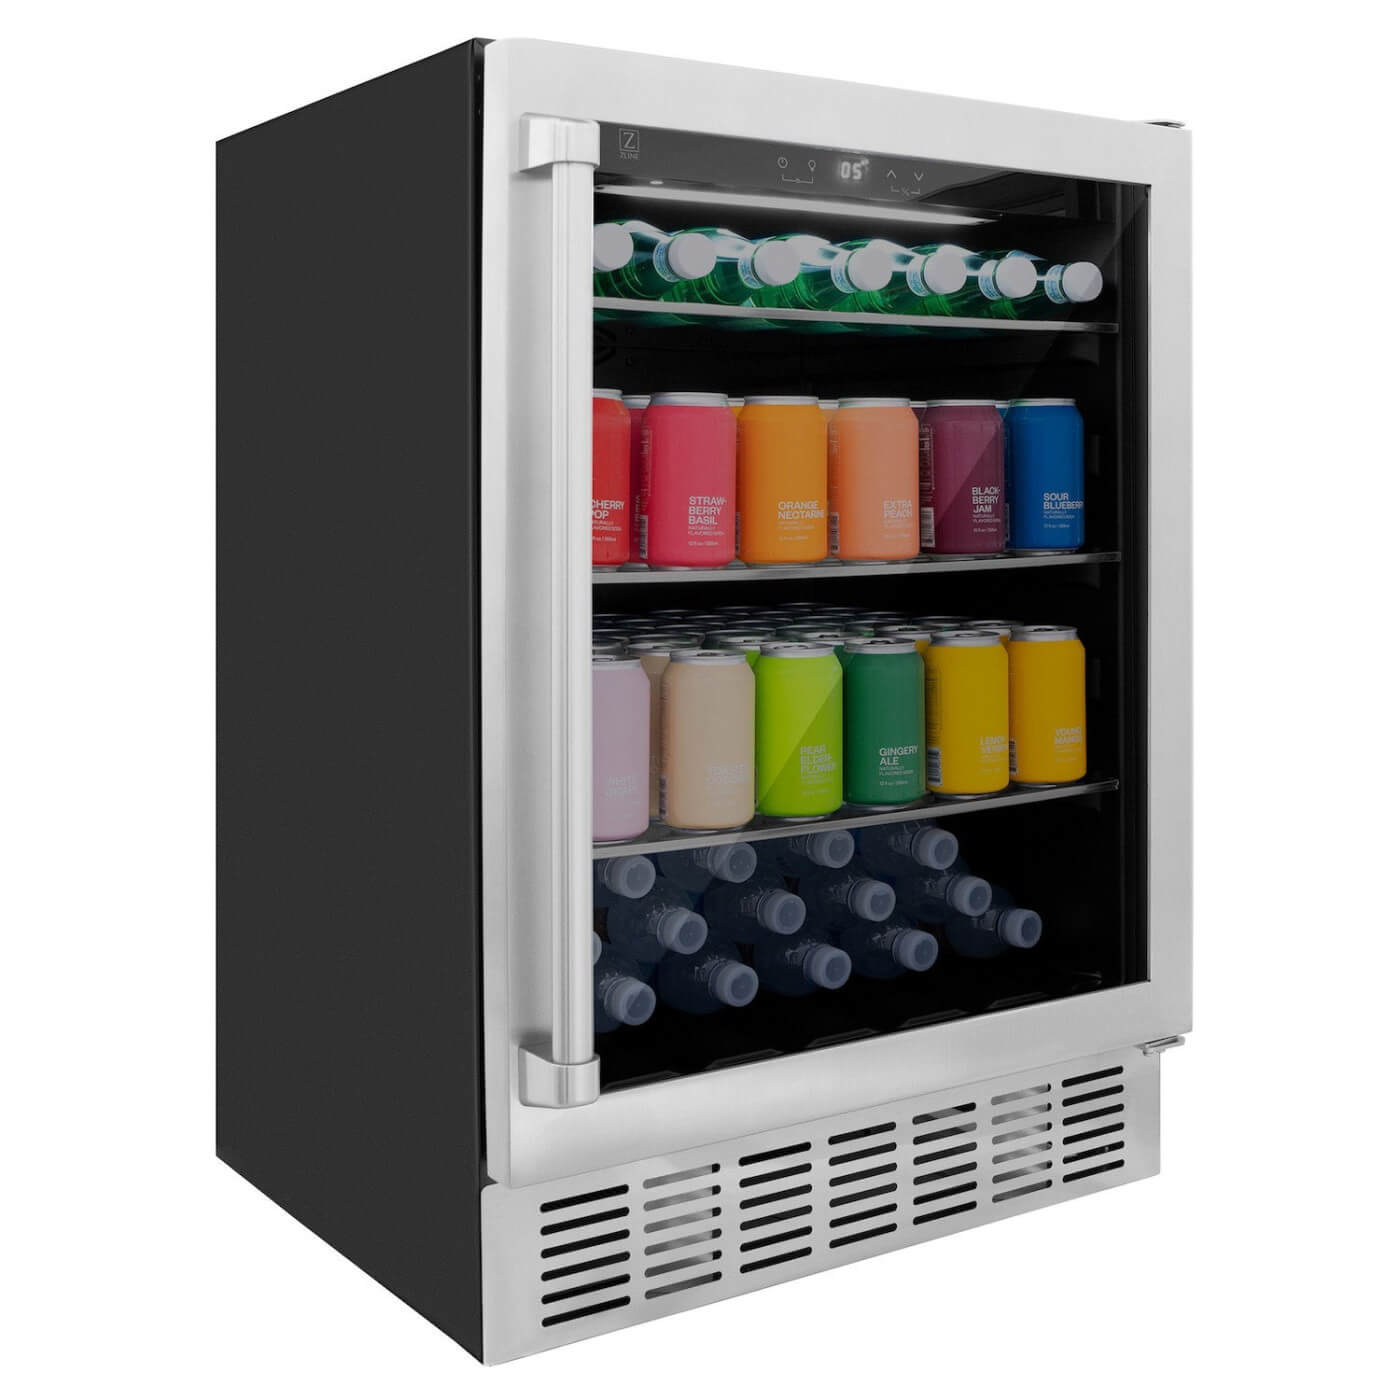 ZLINE beverage fridge with colorful cans inside.